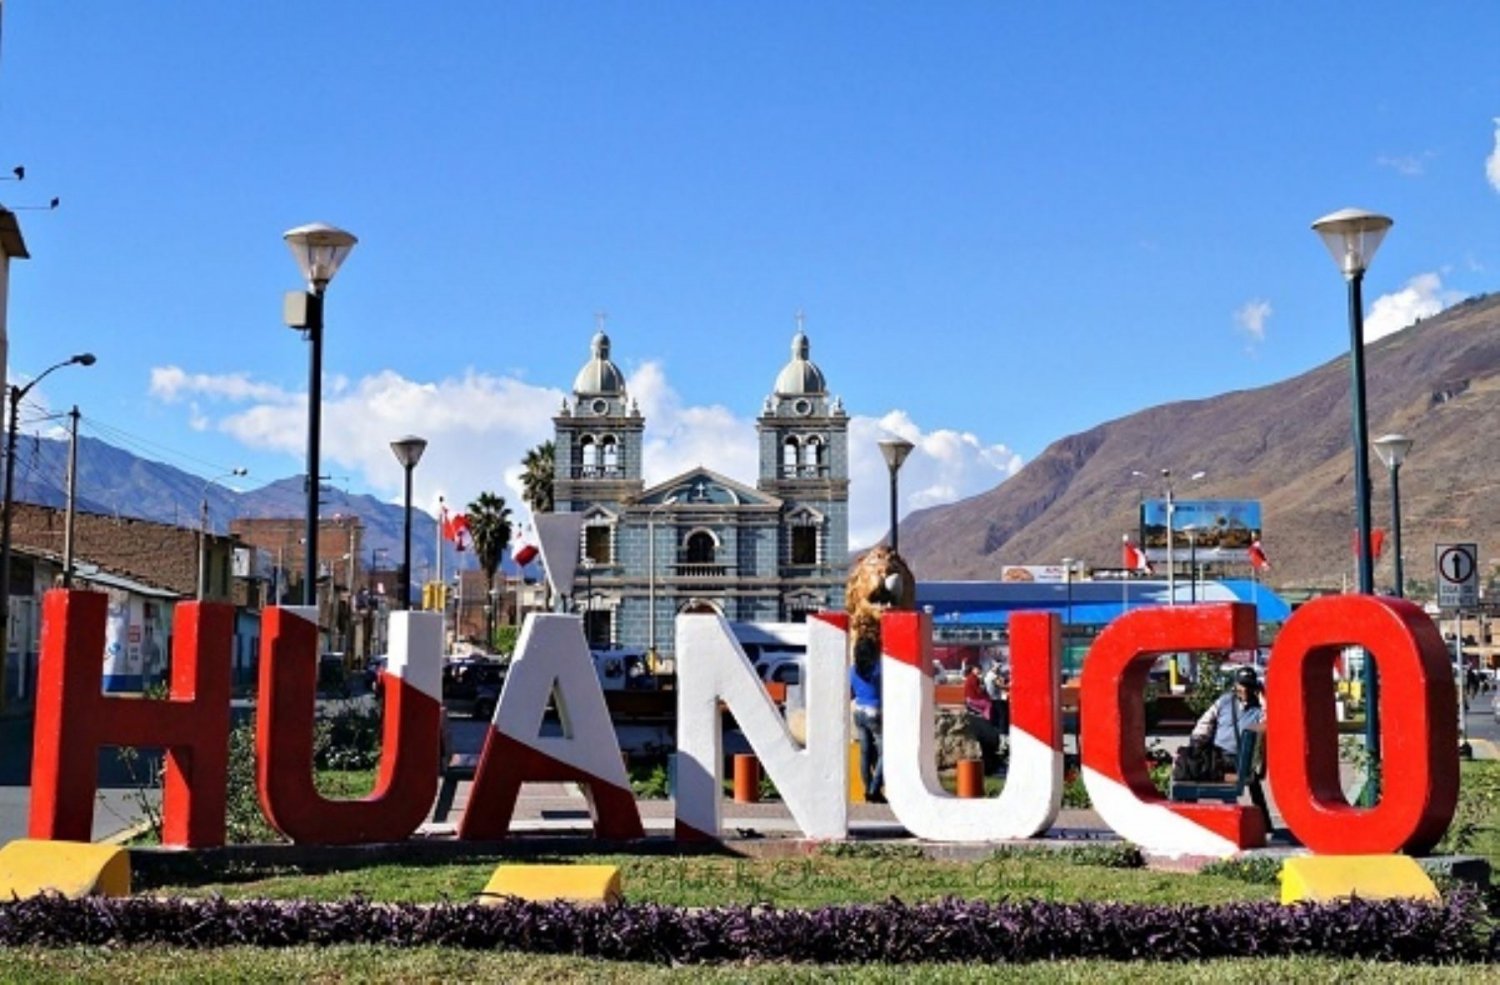 Huanuco